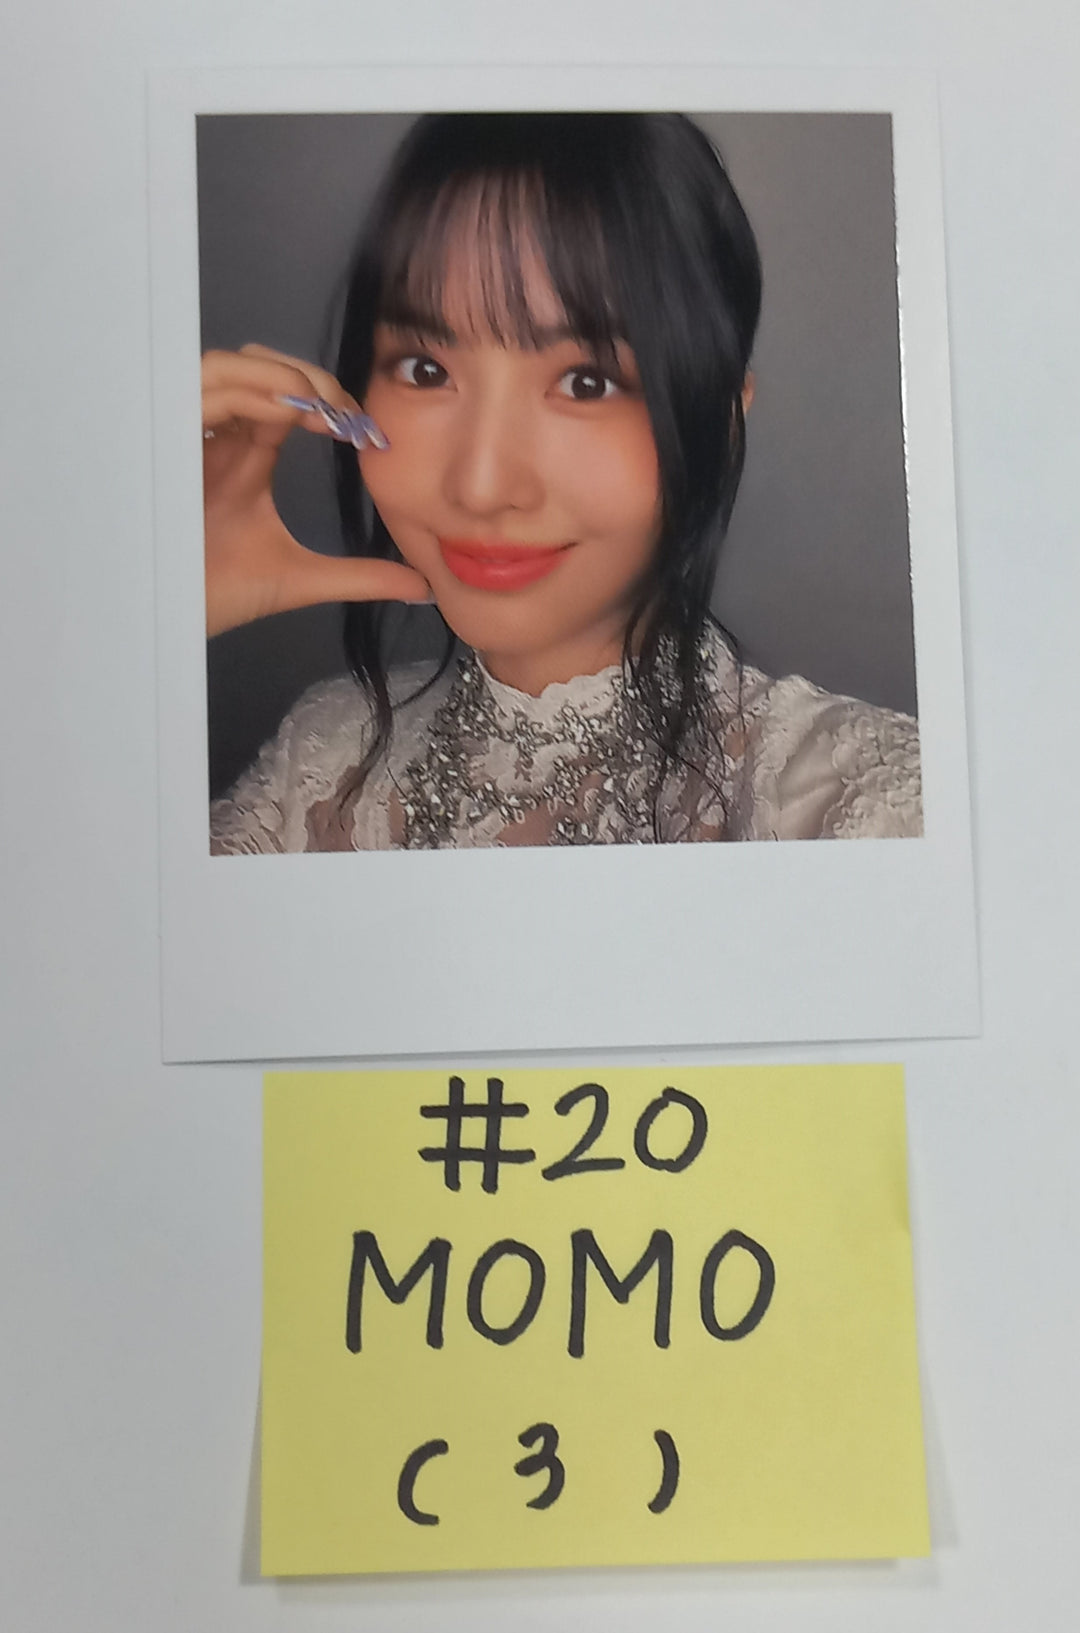 Misamo (Of Twice) "Masterpiece" - Official Photocard, Polaroid Type Photocard [23.08.30]